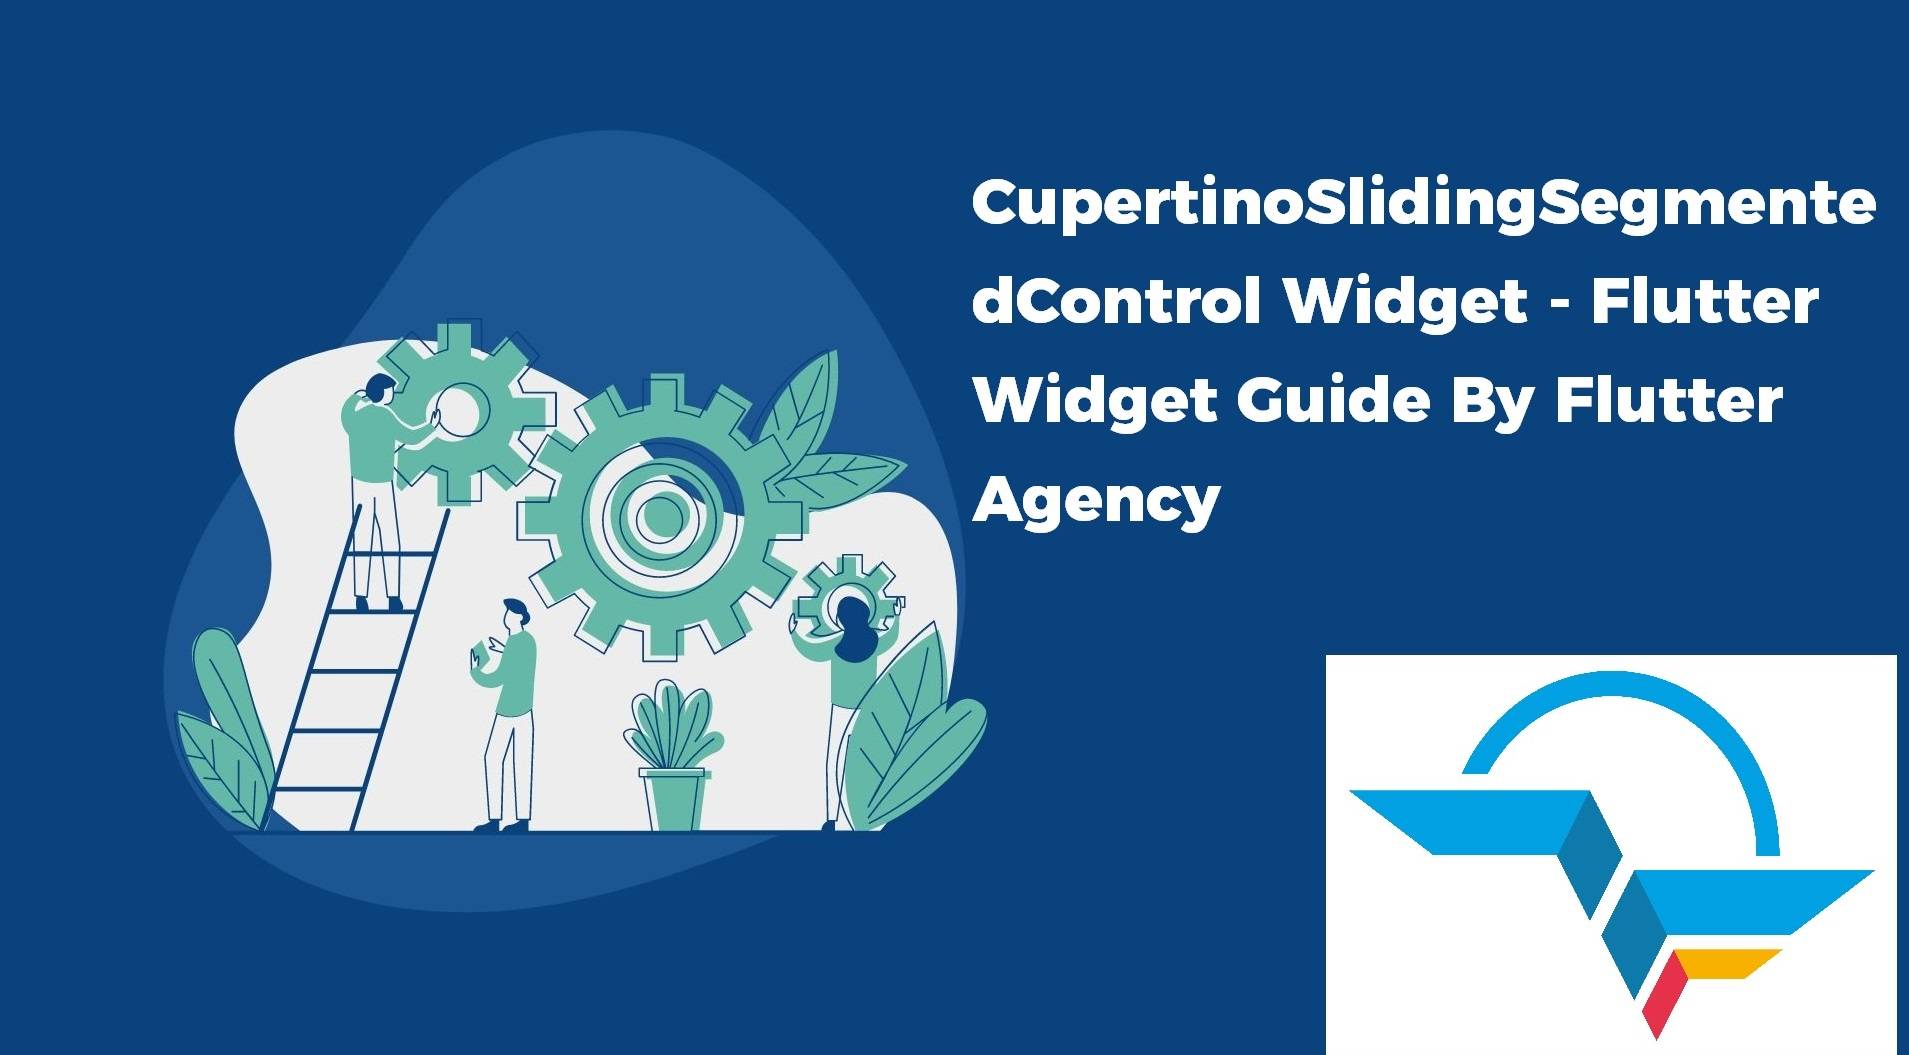 CupertinoSlidingSegmentedControl Widget - Flutter Widget Guide By Flutter Agency